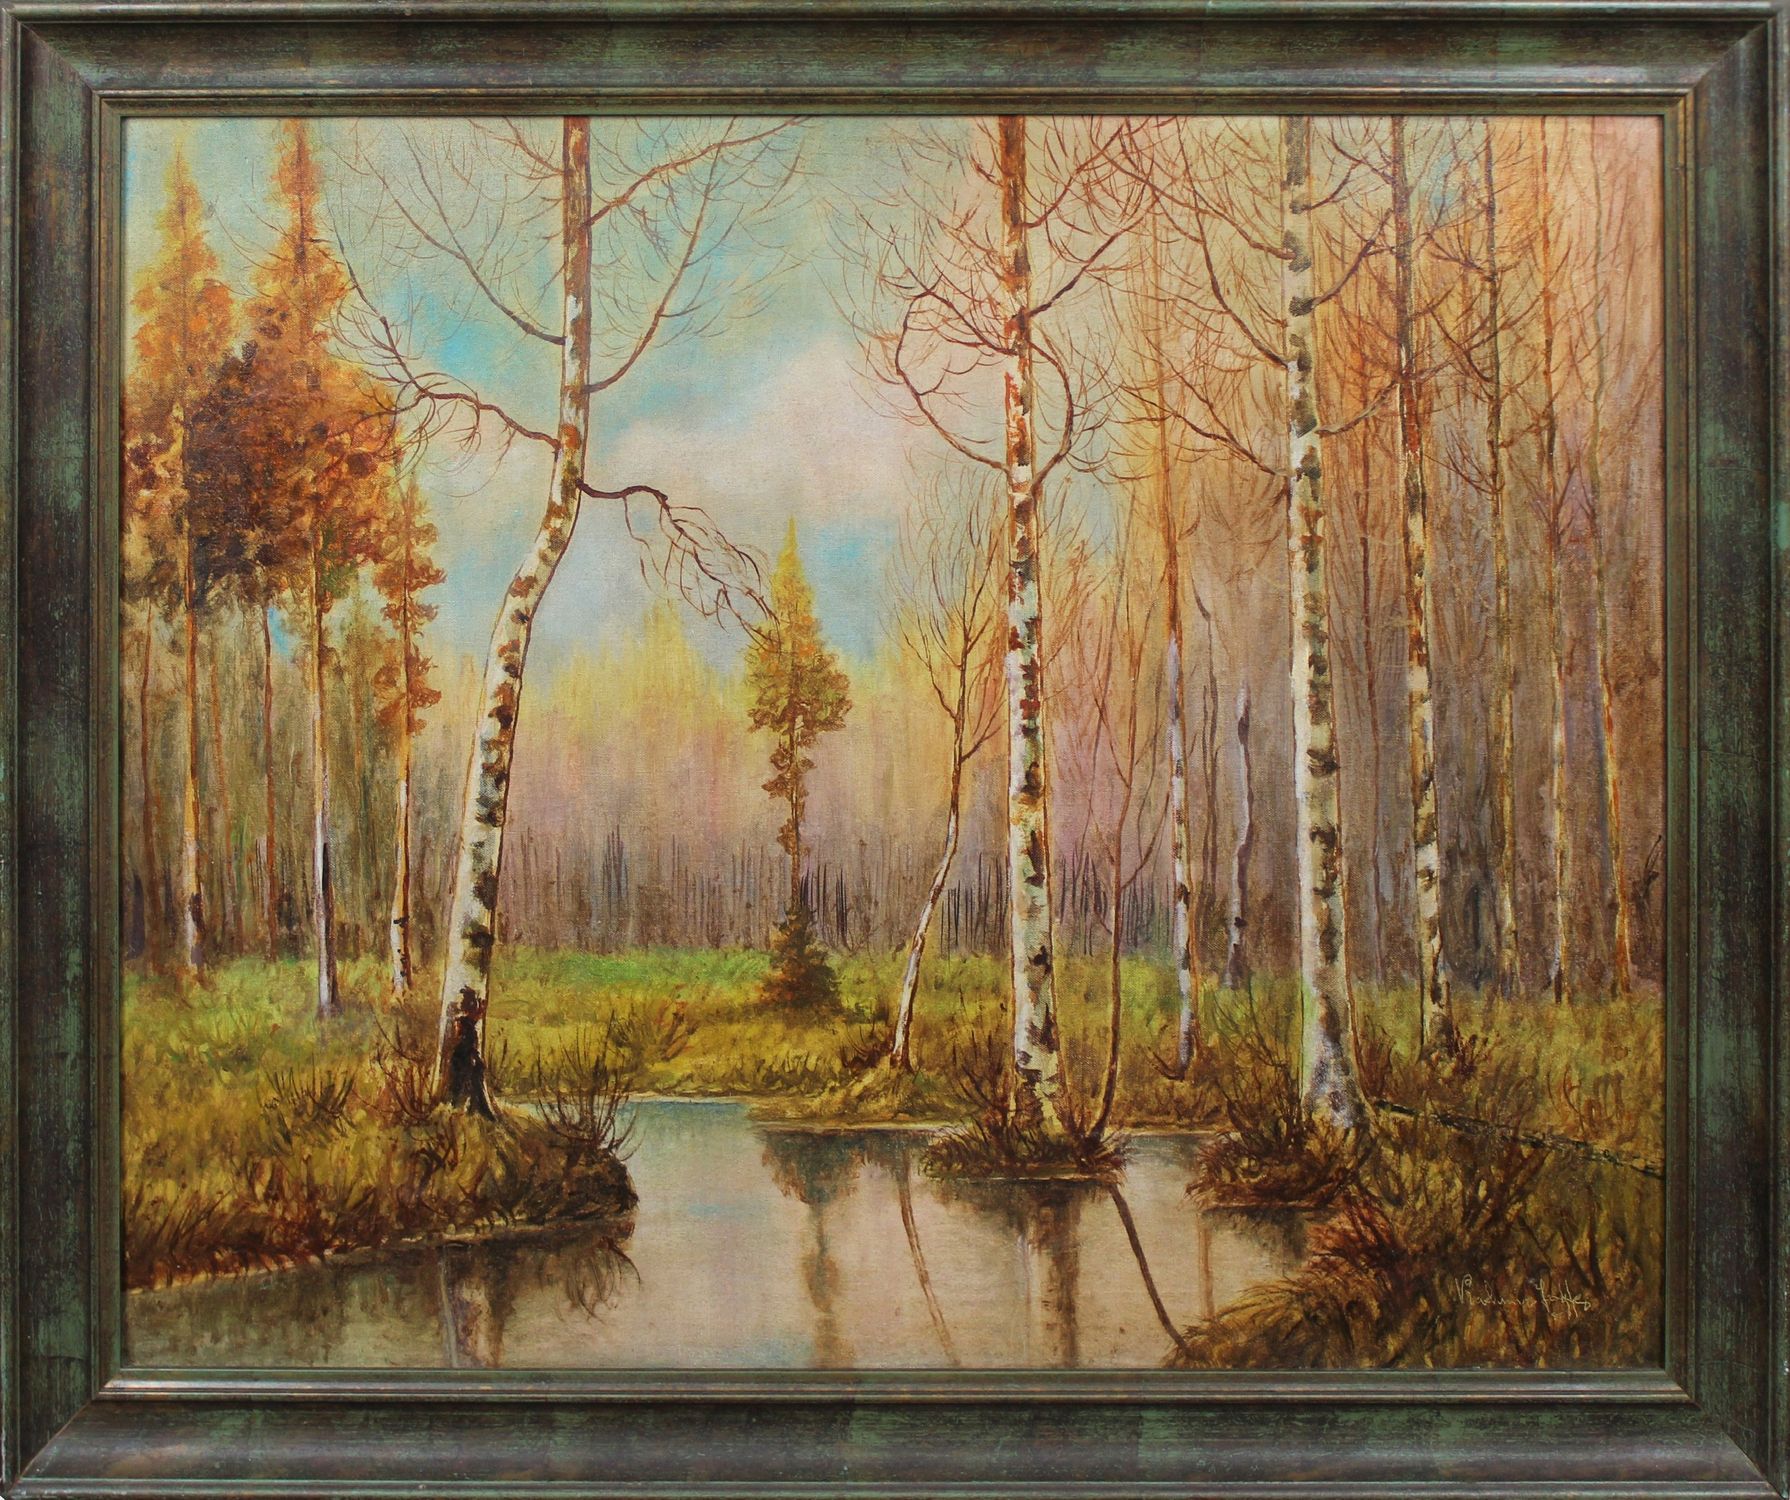 "Forest stream"